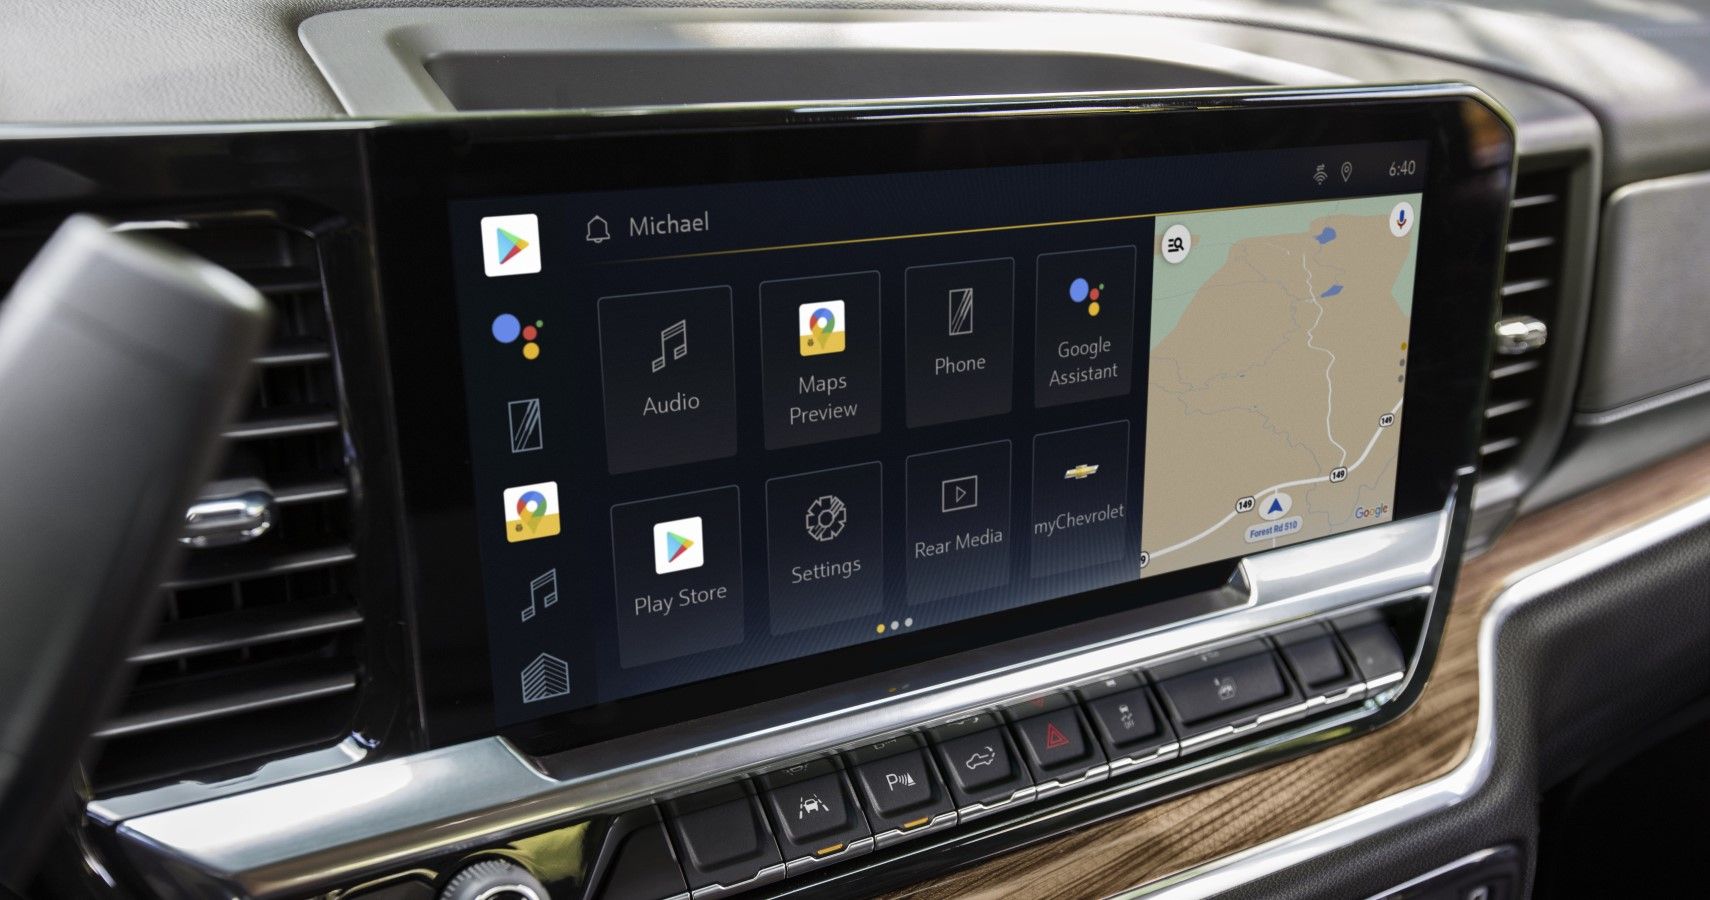 2022 Chevrolet Silverado 1500 13.4-inch infotainment screen close-up view